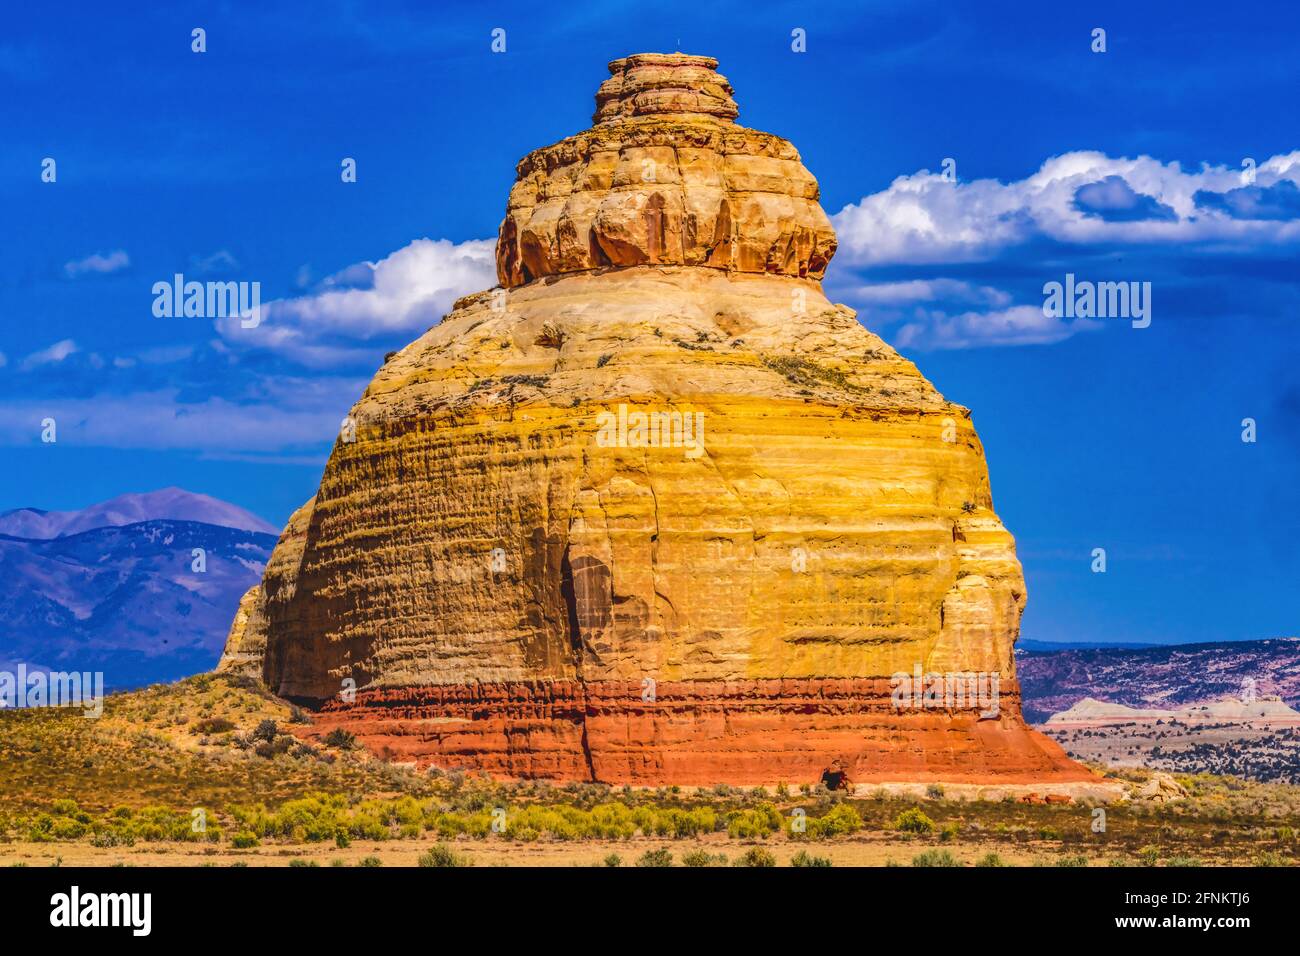 Colorful Church Rock Formation Entrance Canyonlands National Park Needles District Utah.  Rock looks like Buddhist Stupa Stock Photo